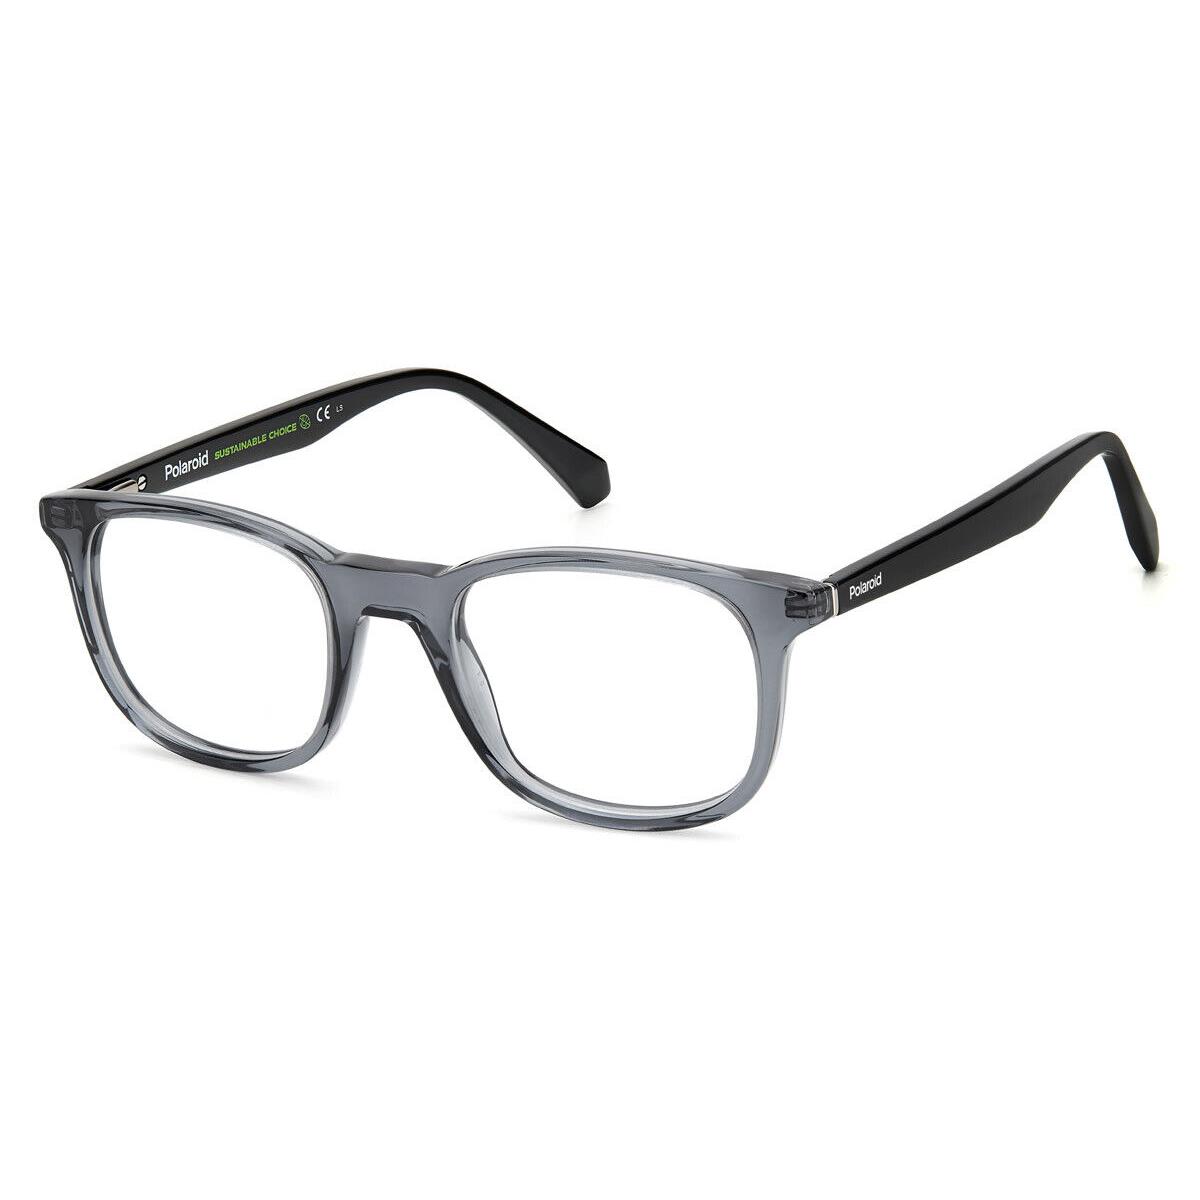 Polaroid D 424 Eyeglasses Men Gray Square 50mm